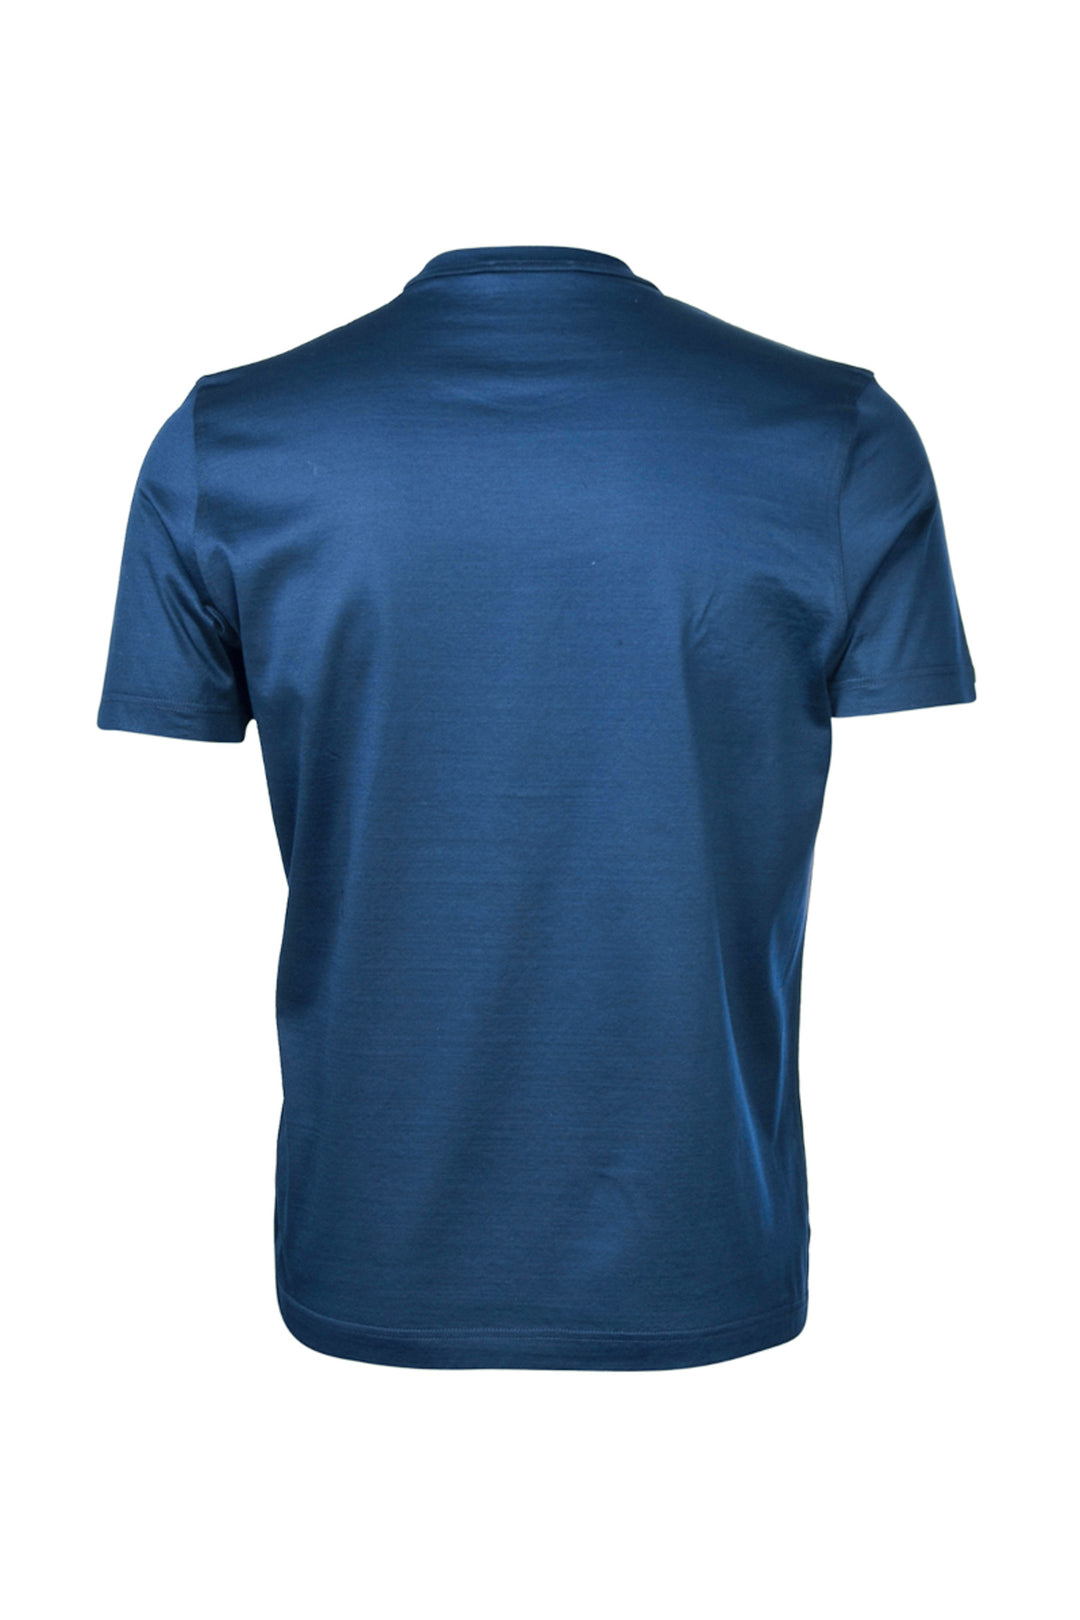 GRAN SASSO T-shirt blu in filo di Scozia - Mancinelli 1954